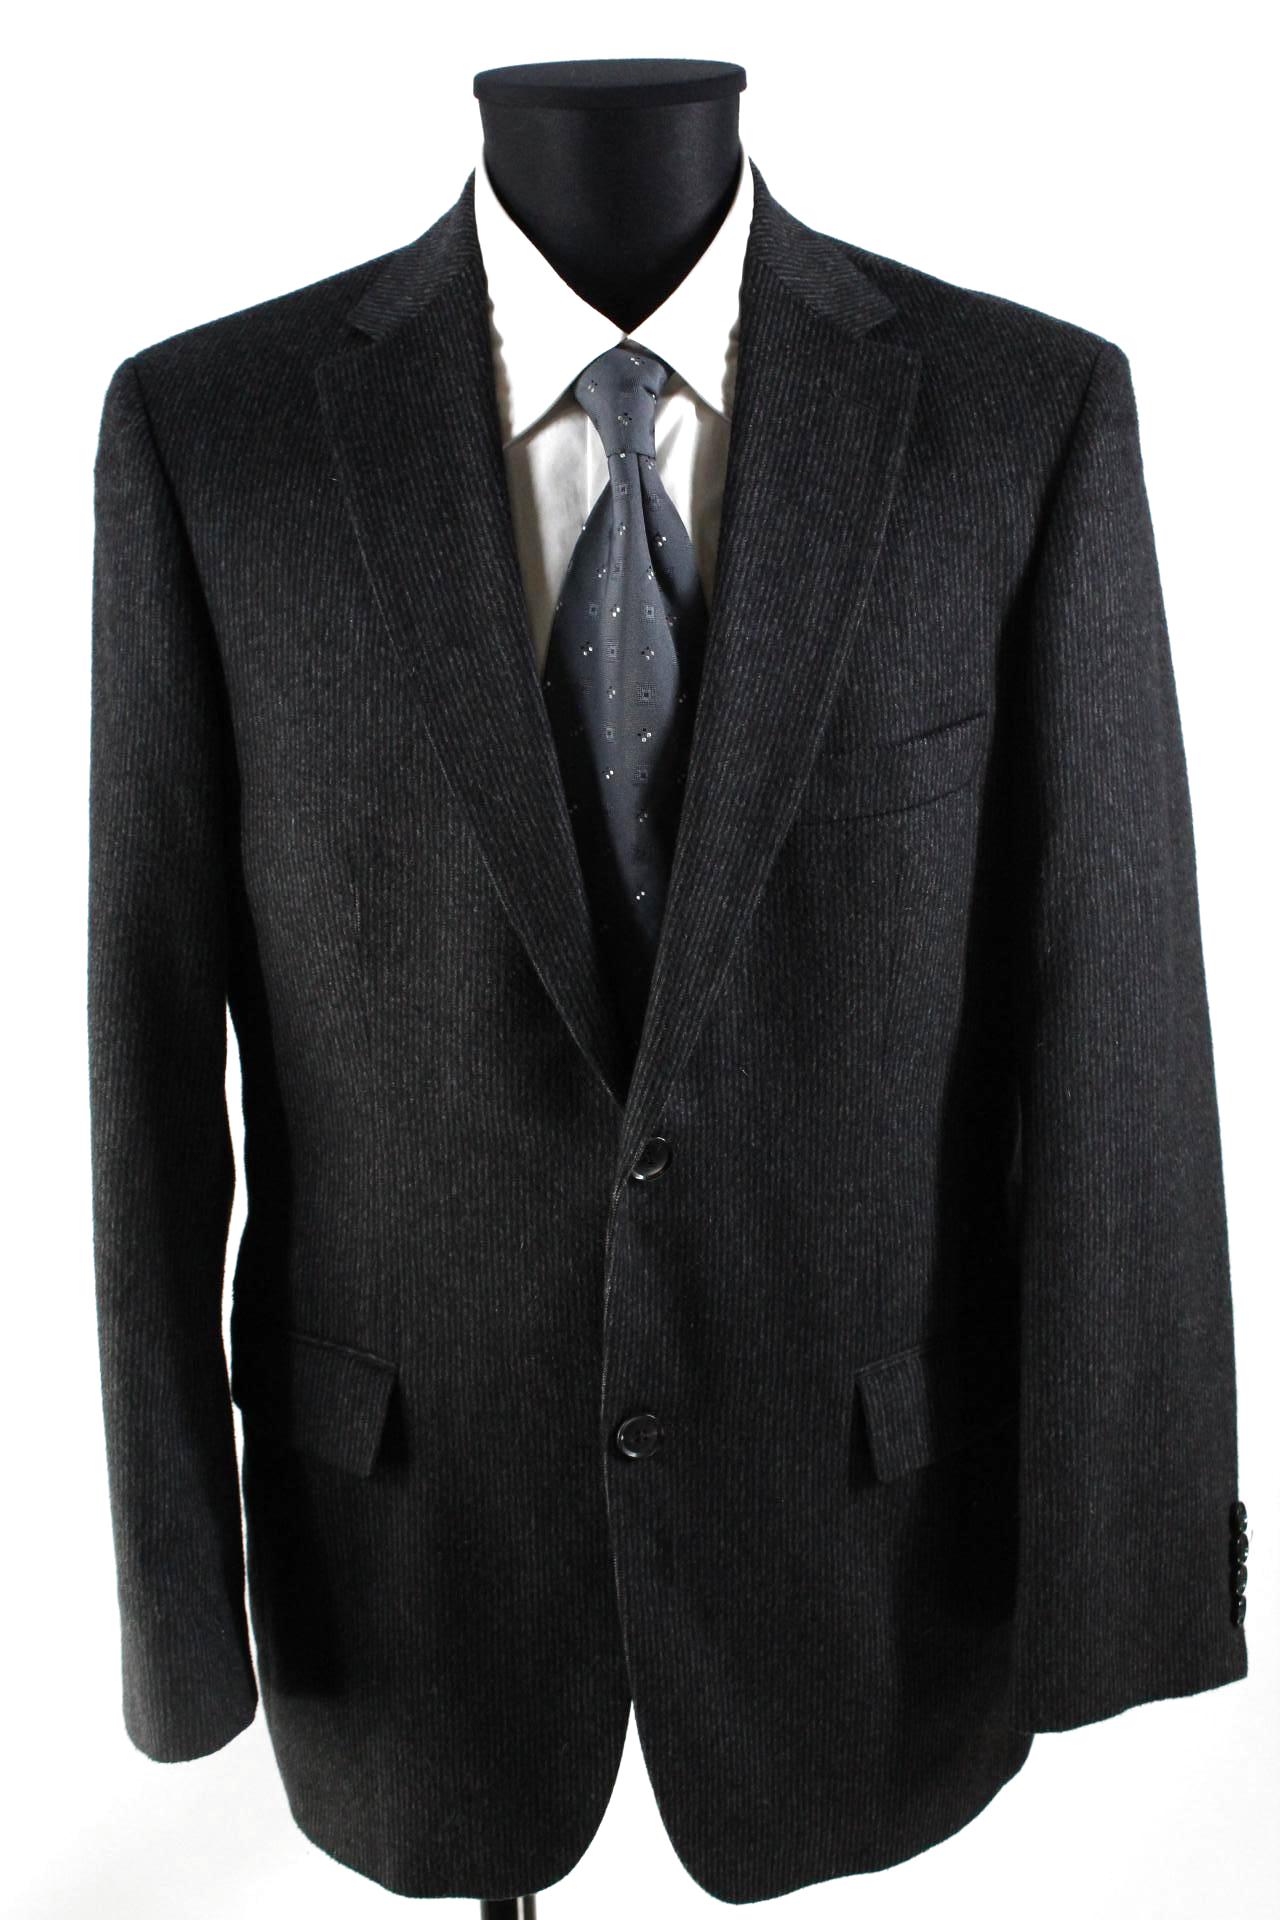 Hugo Boss Tweed-Sakko schwarz/grau Größe 48